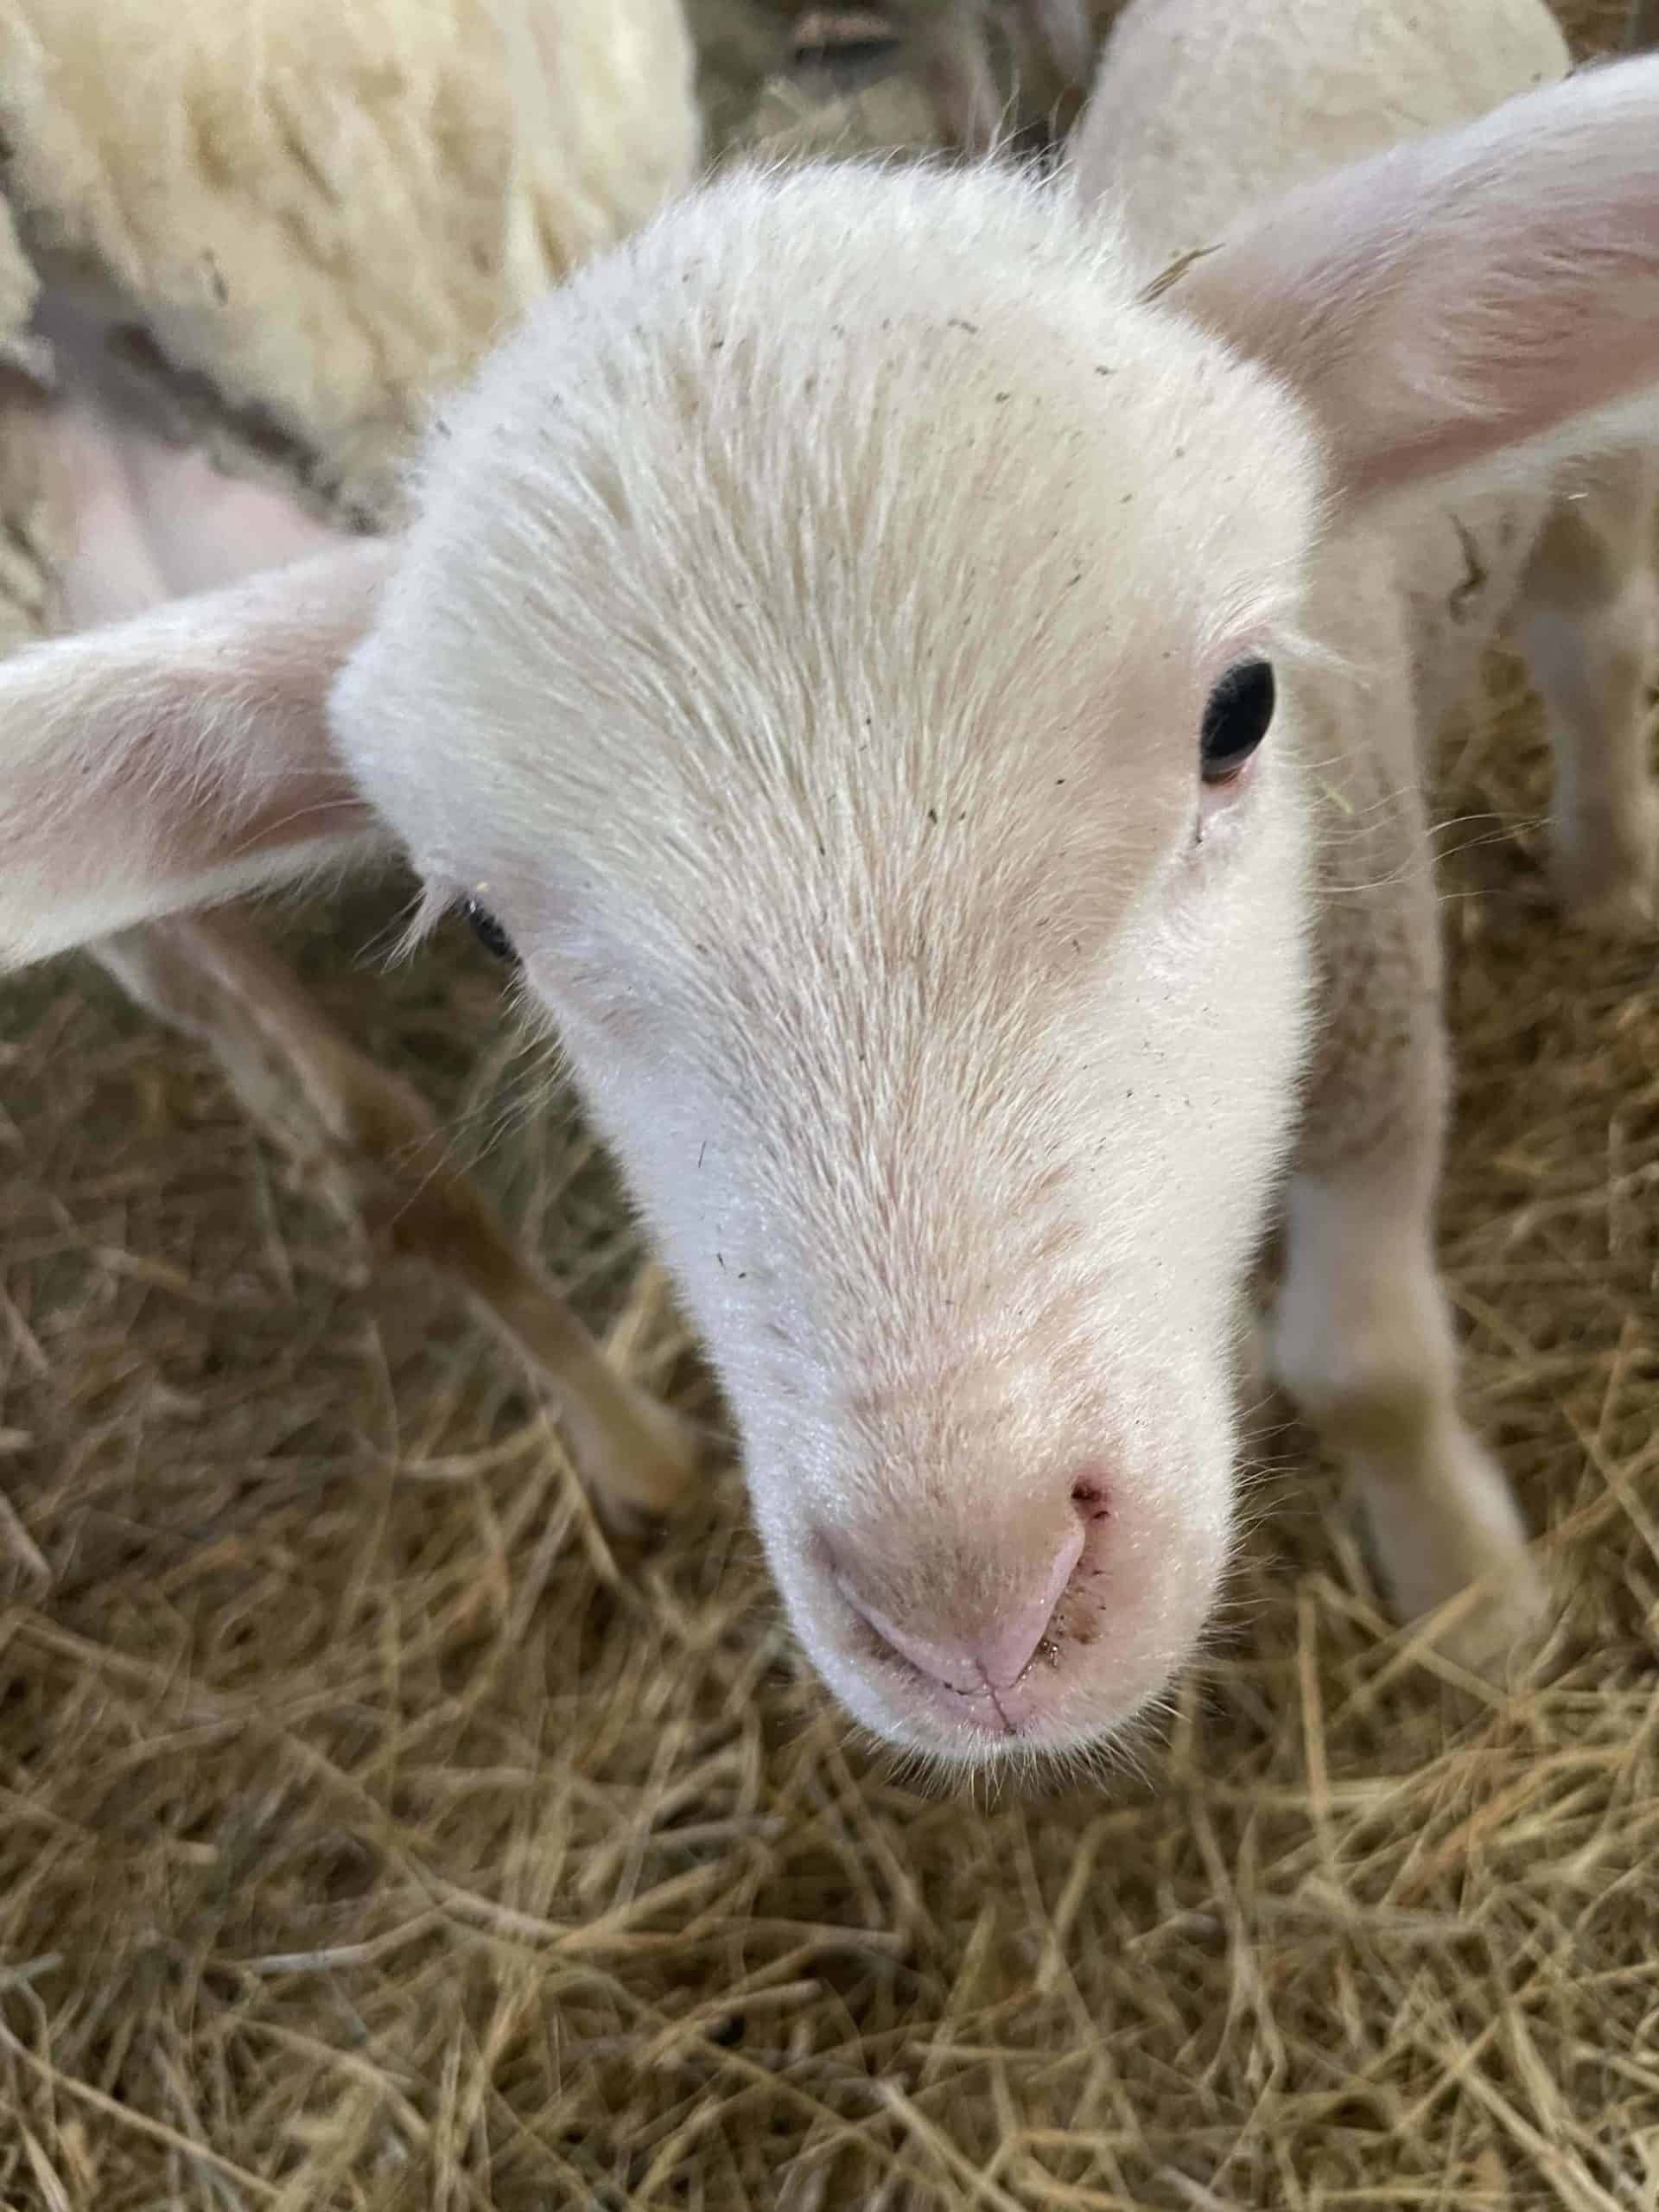 A lamb investigates visitors to the annual baby animals festival at Hancock Shaker Village.